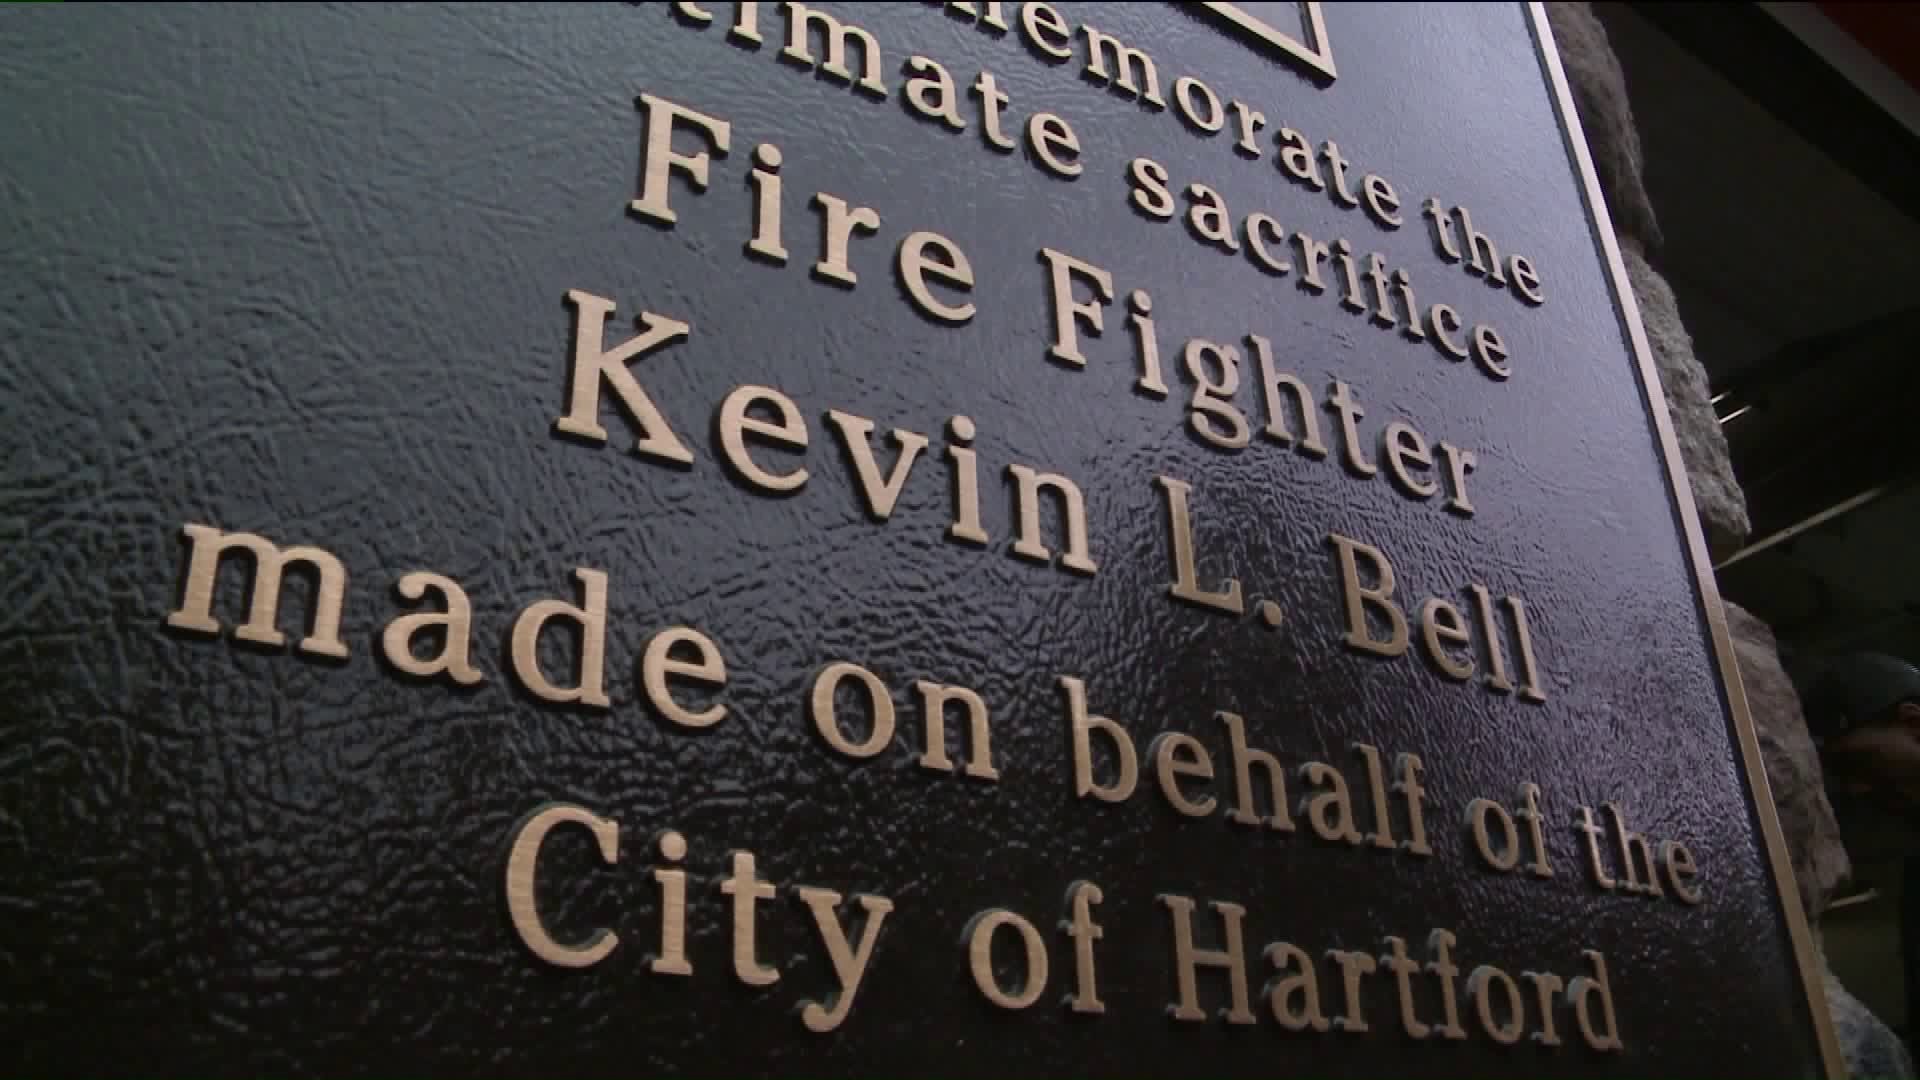 Fallen firefighter honored in Hartford